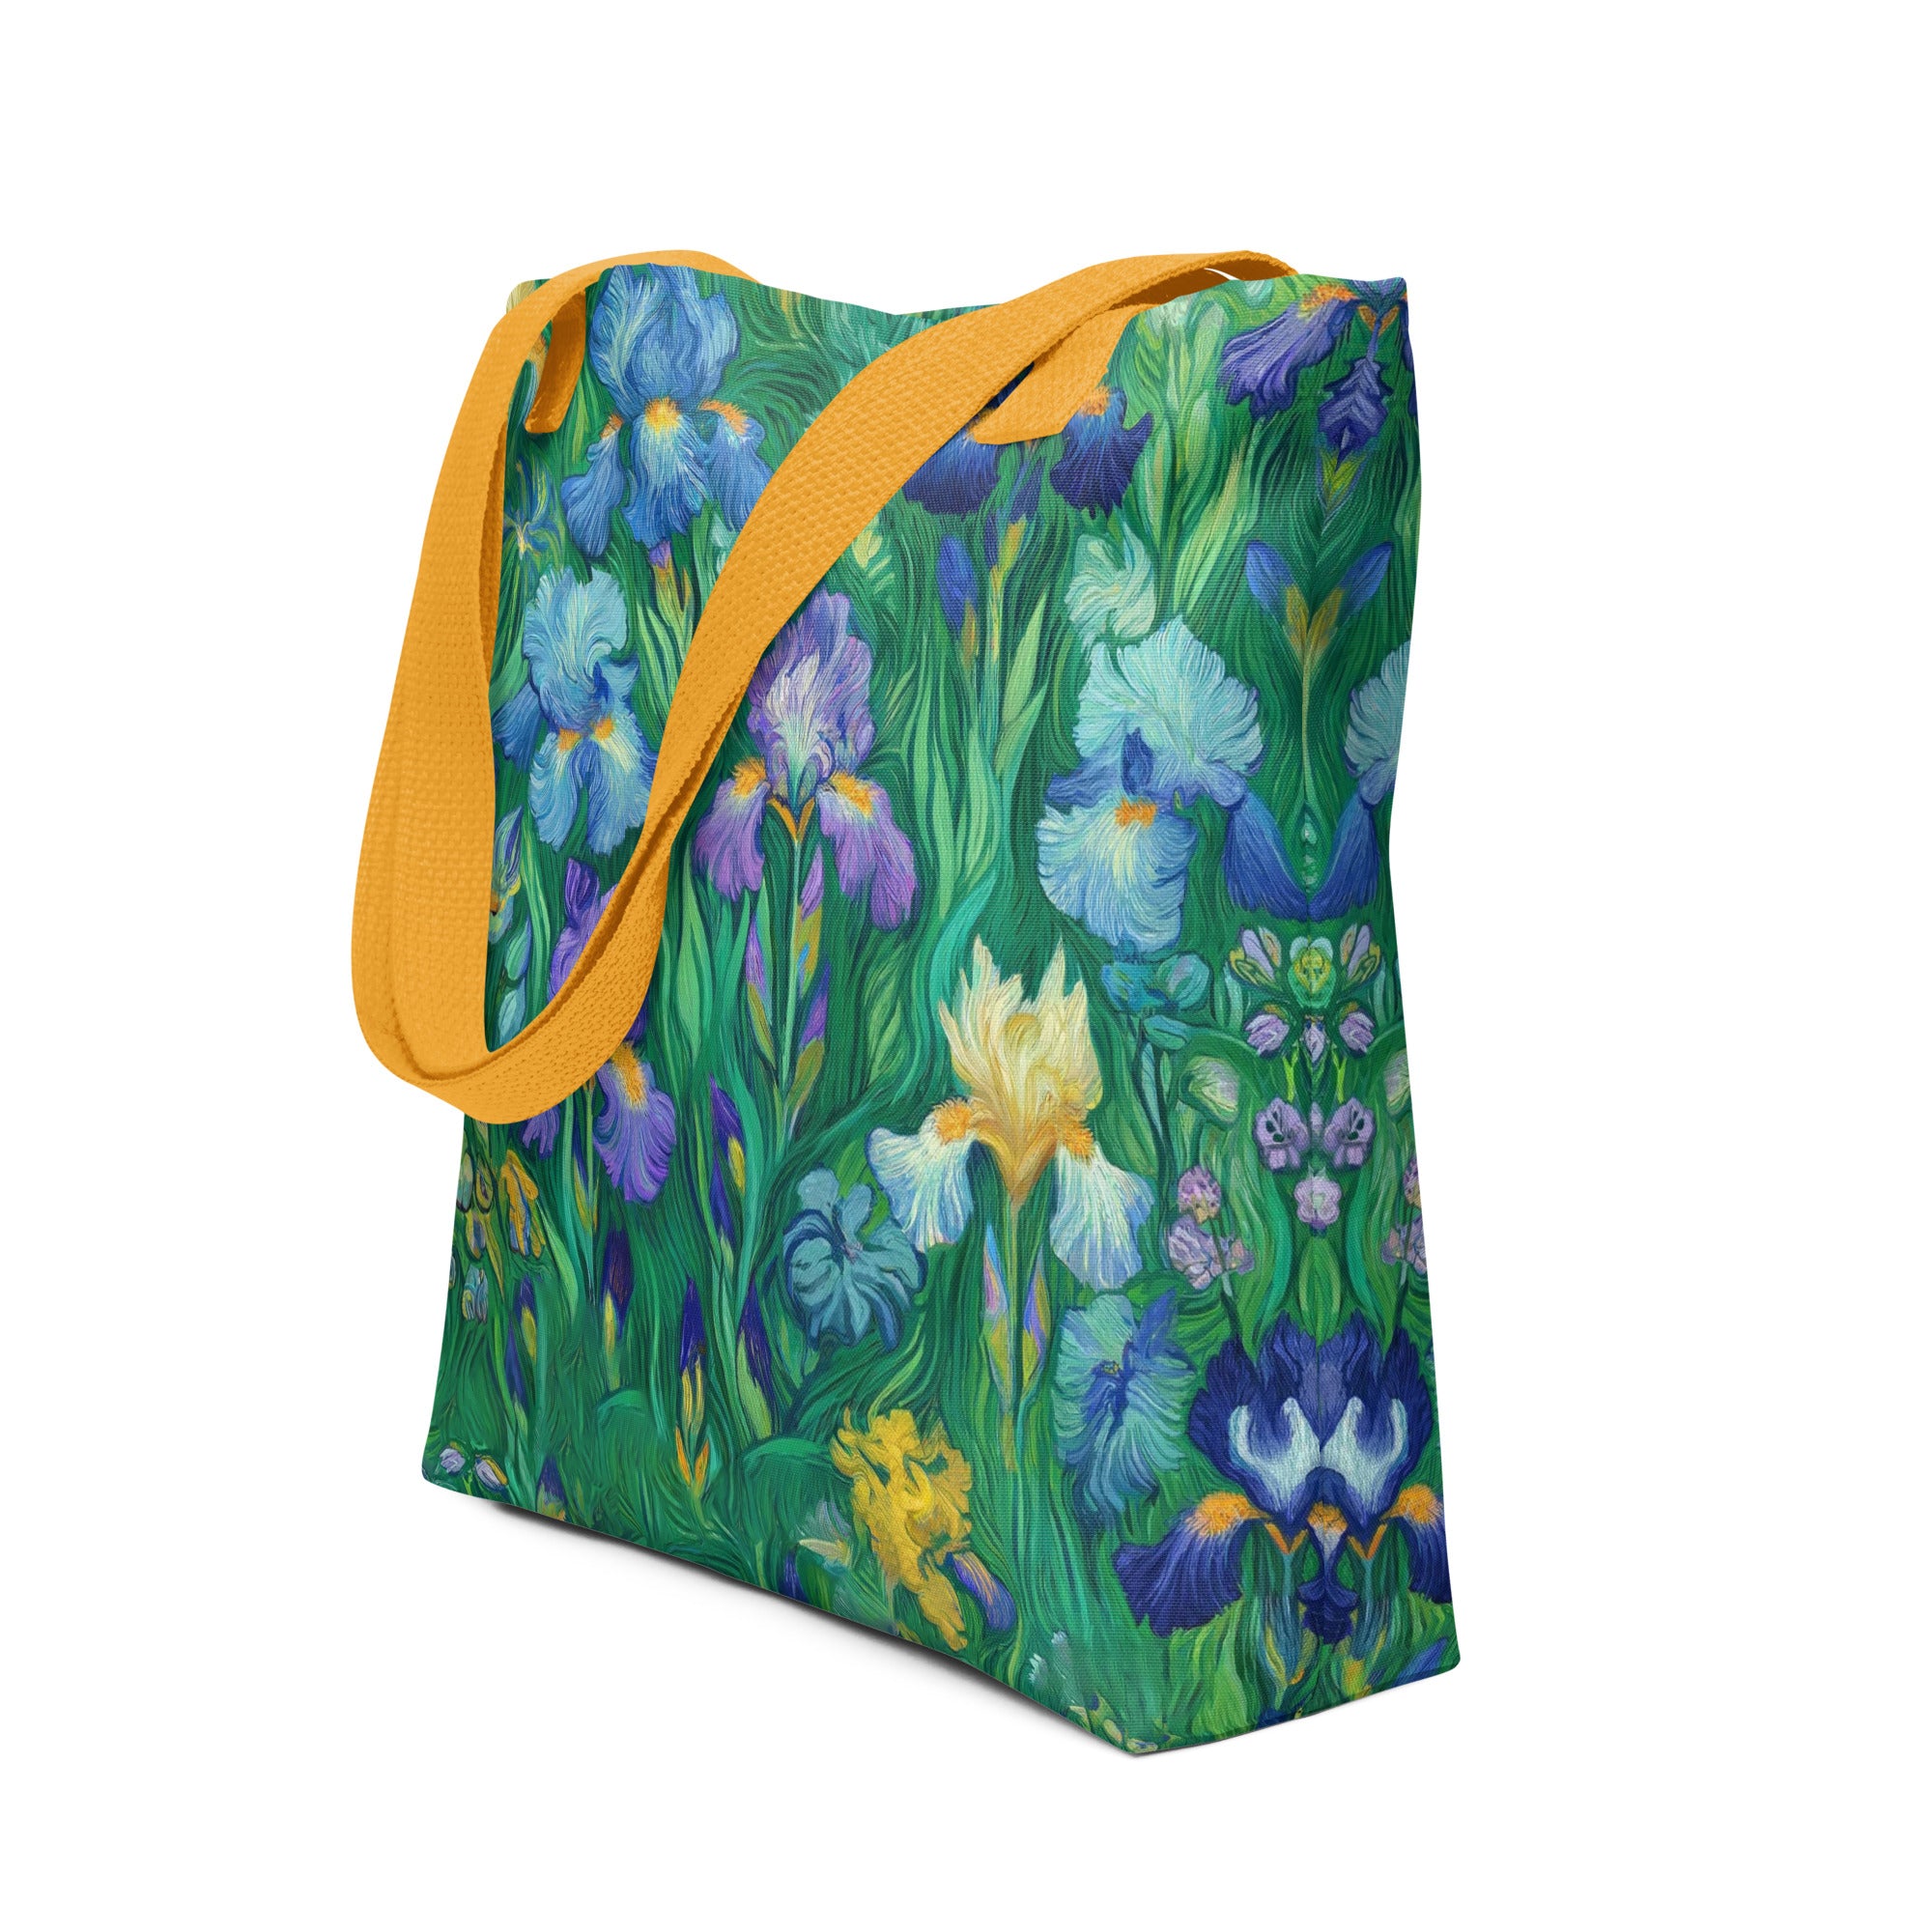 Vincent van Gogh 'Irises' Famous Painting Totebag | Allover Print Art Tote Bag